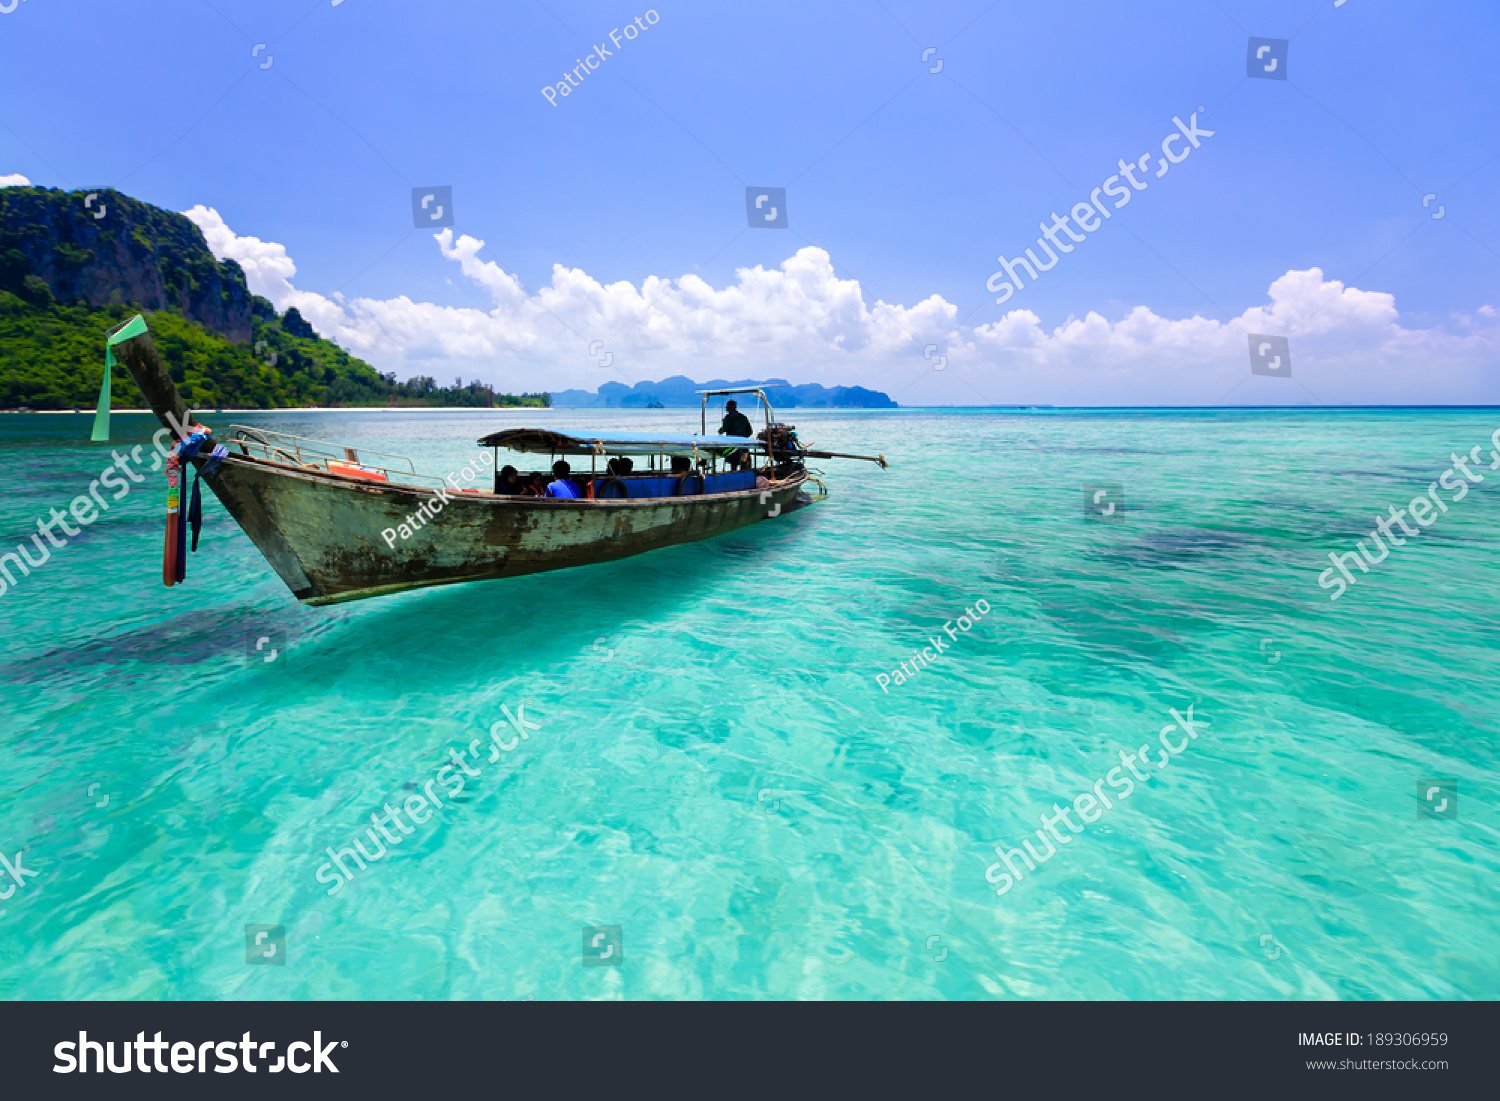 Wooden boat and blue water ocean, Krabi Thailand #189306959